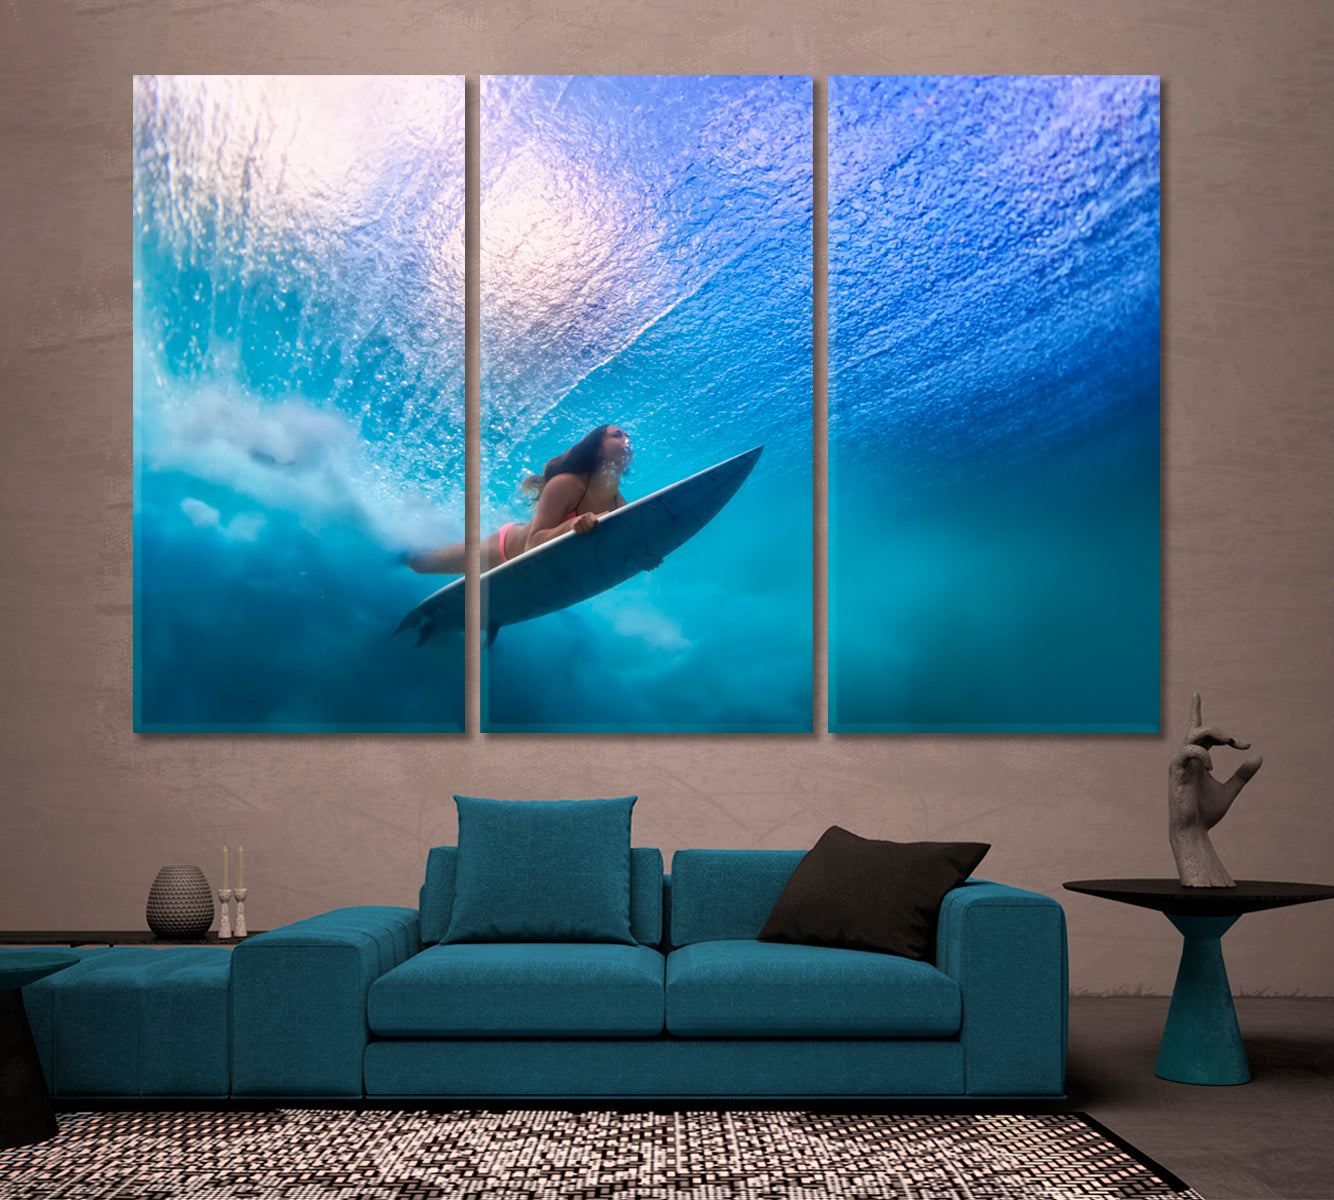 UNDERWATER Breaking Ocean Wave Extreme Surfing Dive Sport Motivation Sport Poster Print Decor Artesty 3 panels 36" x 24" 